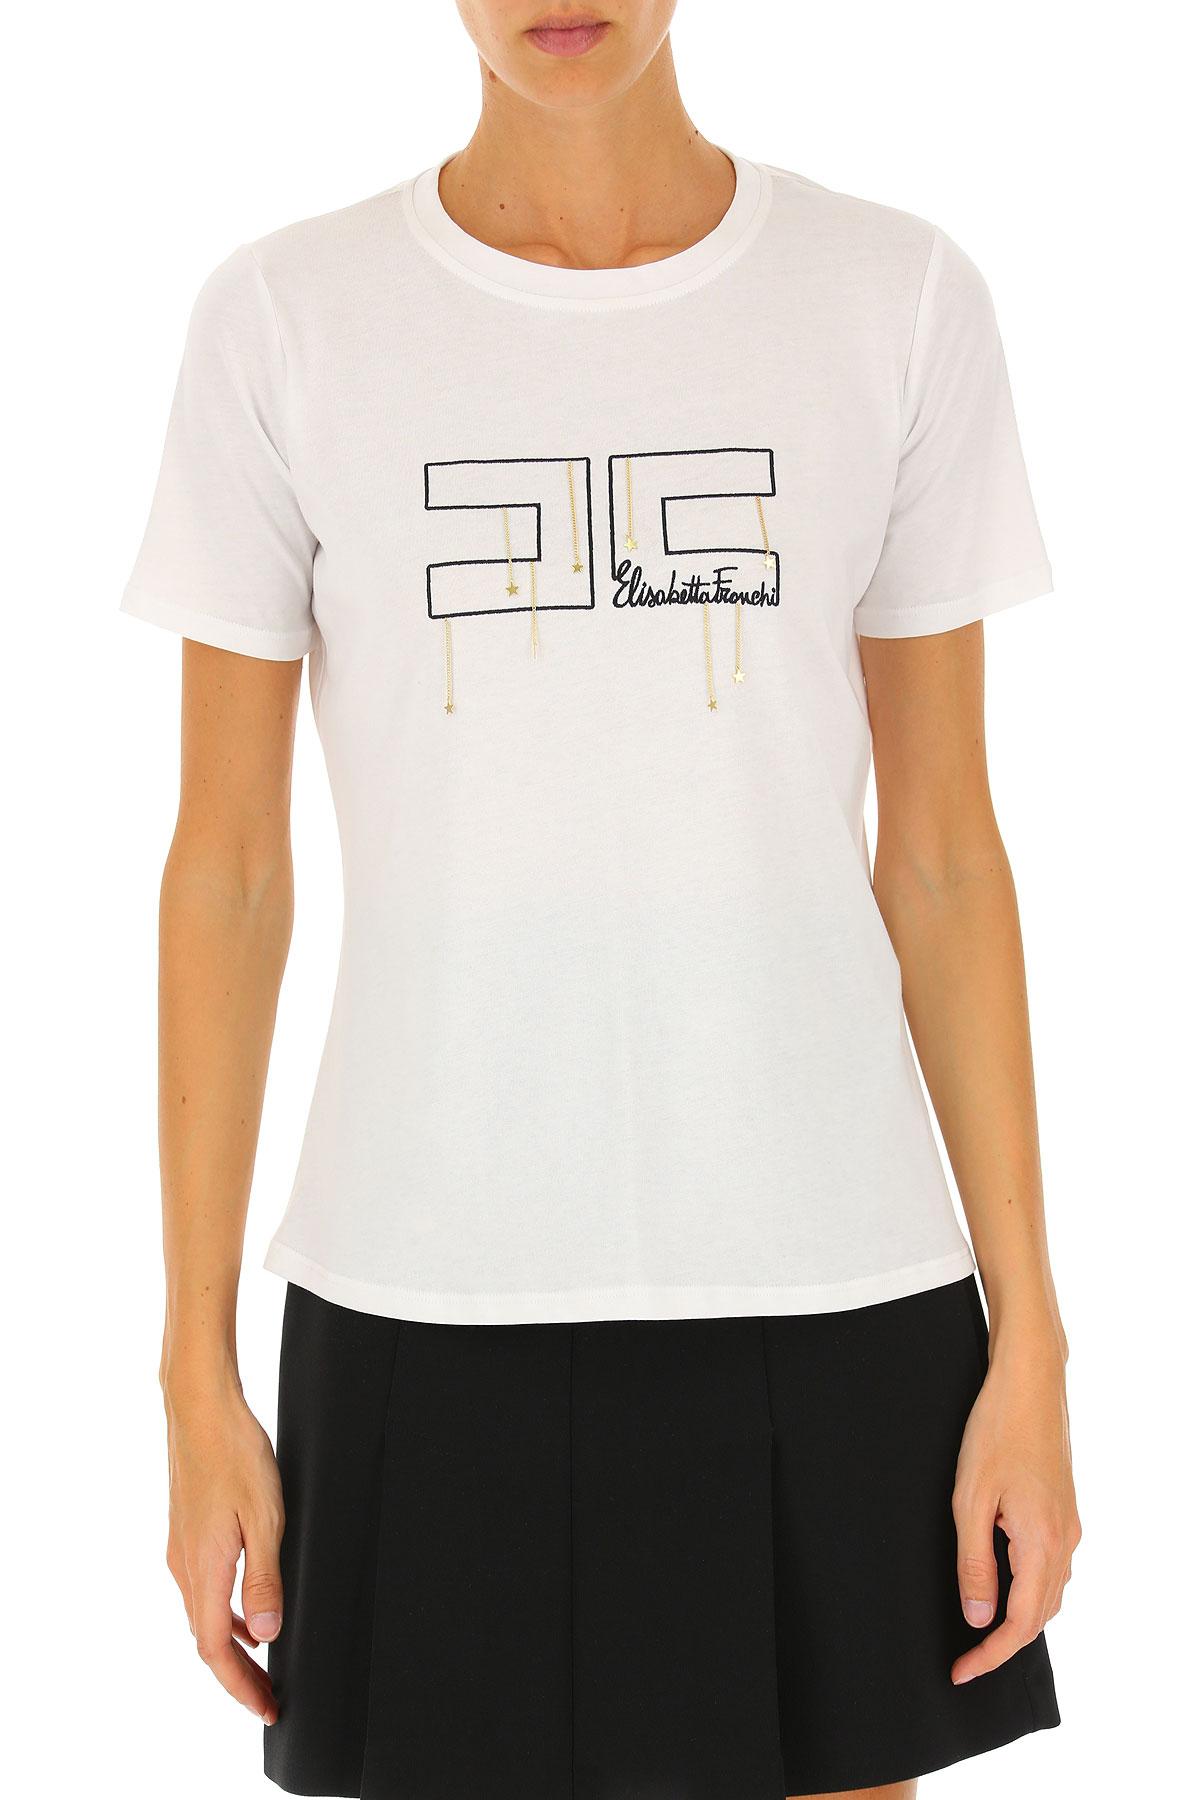 Elisabetta Franchi Cotton T-shirt For Women On Sale in White - Lyst